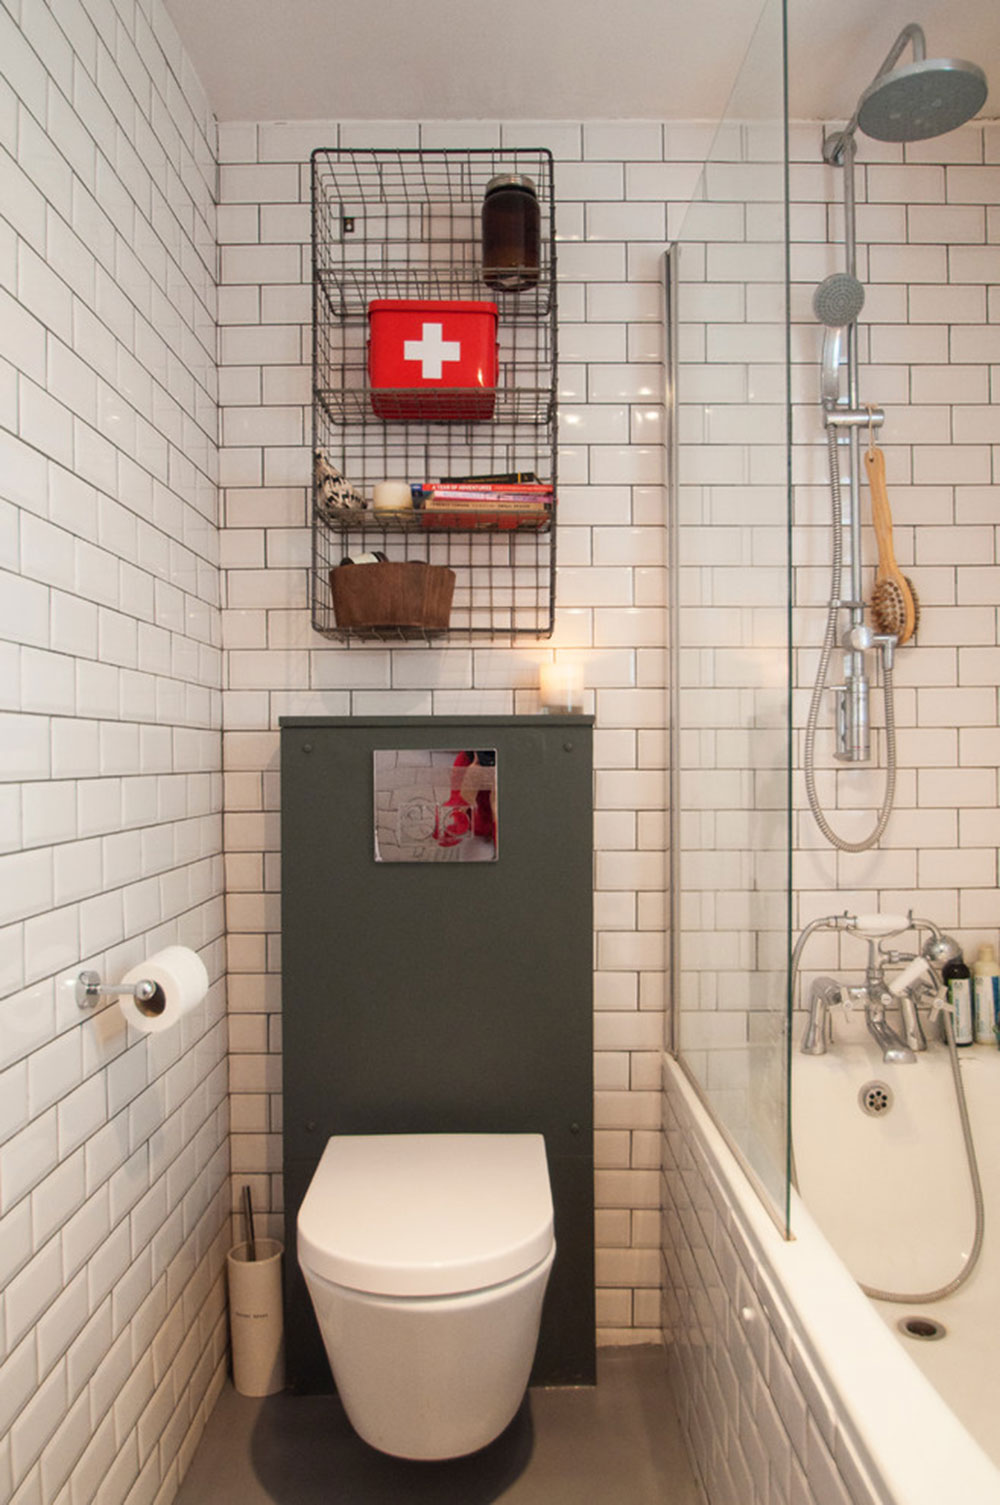 North-London-Flat-by-Amelia-Hallsworth-Photography Small bathroom shelf ideas to optimize your bathroom space